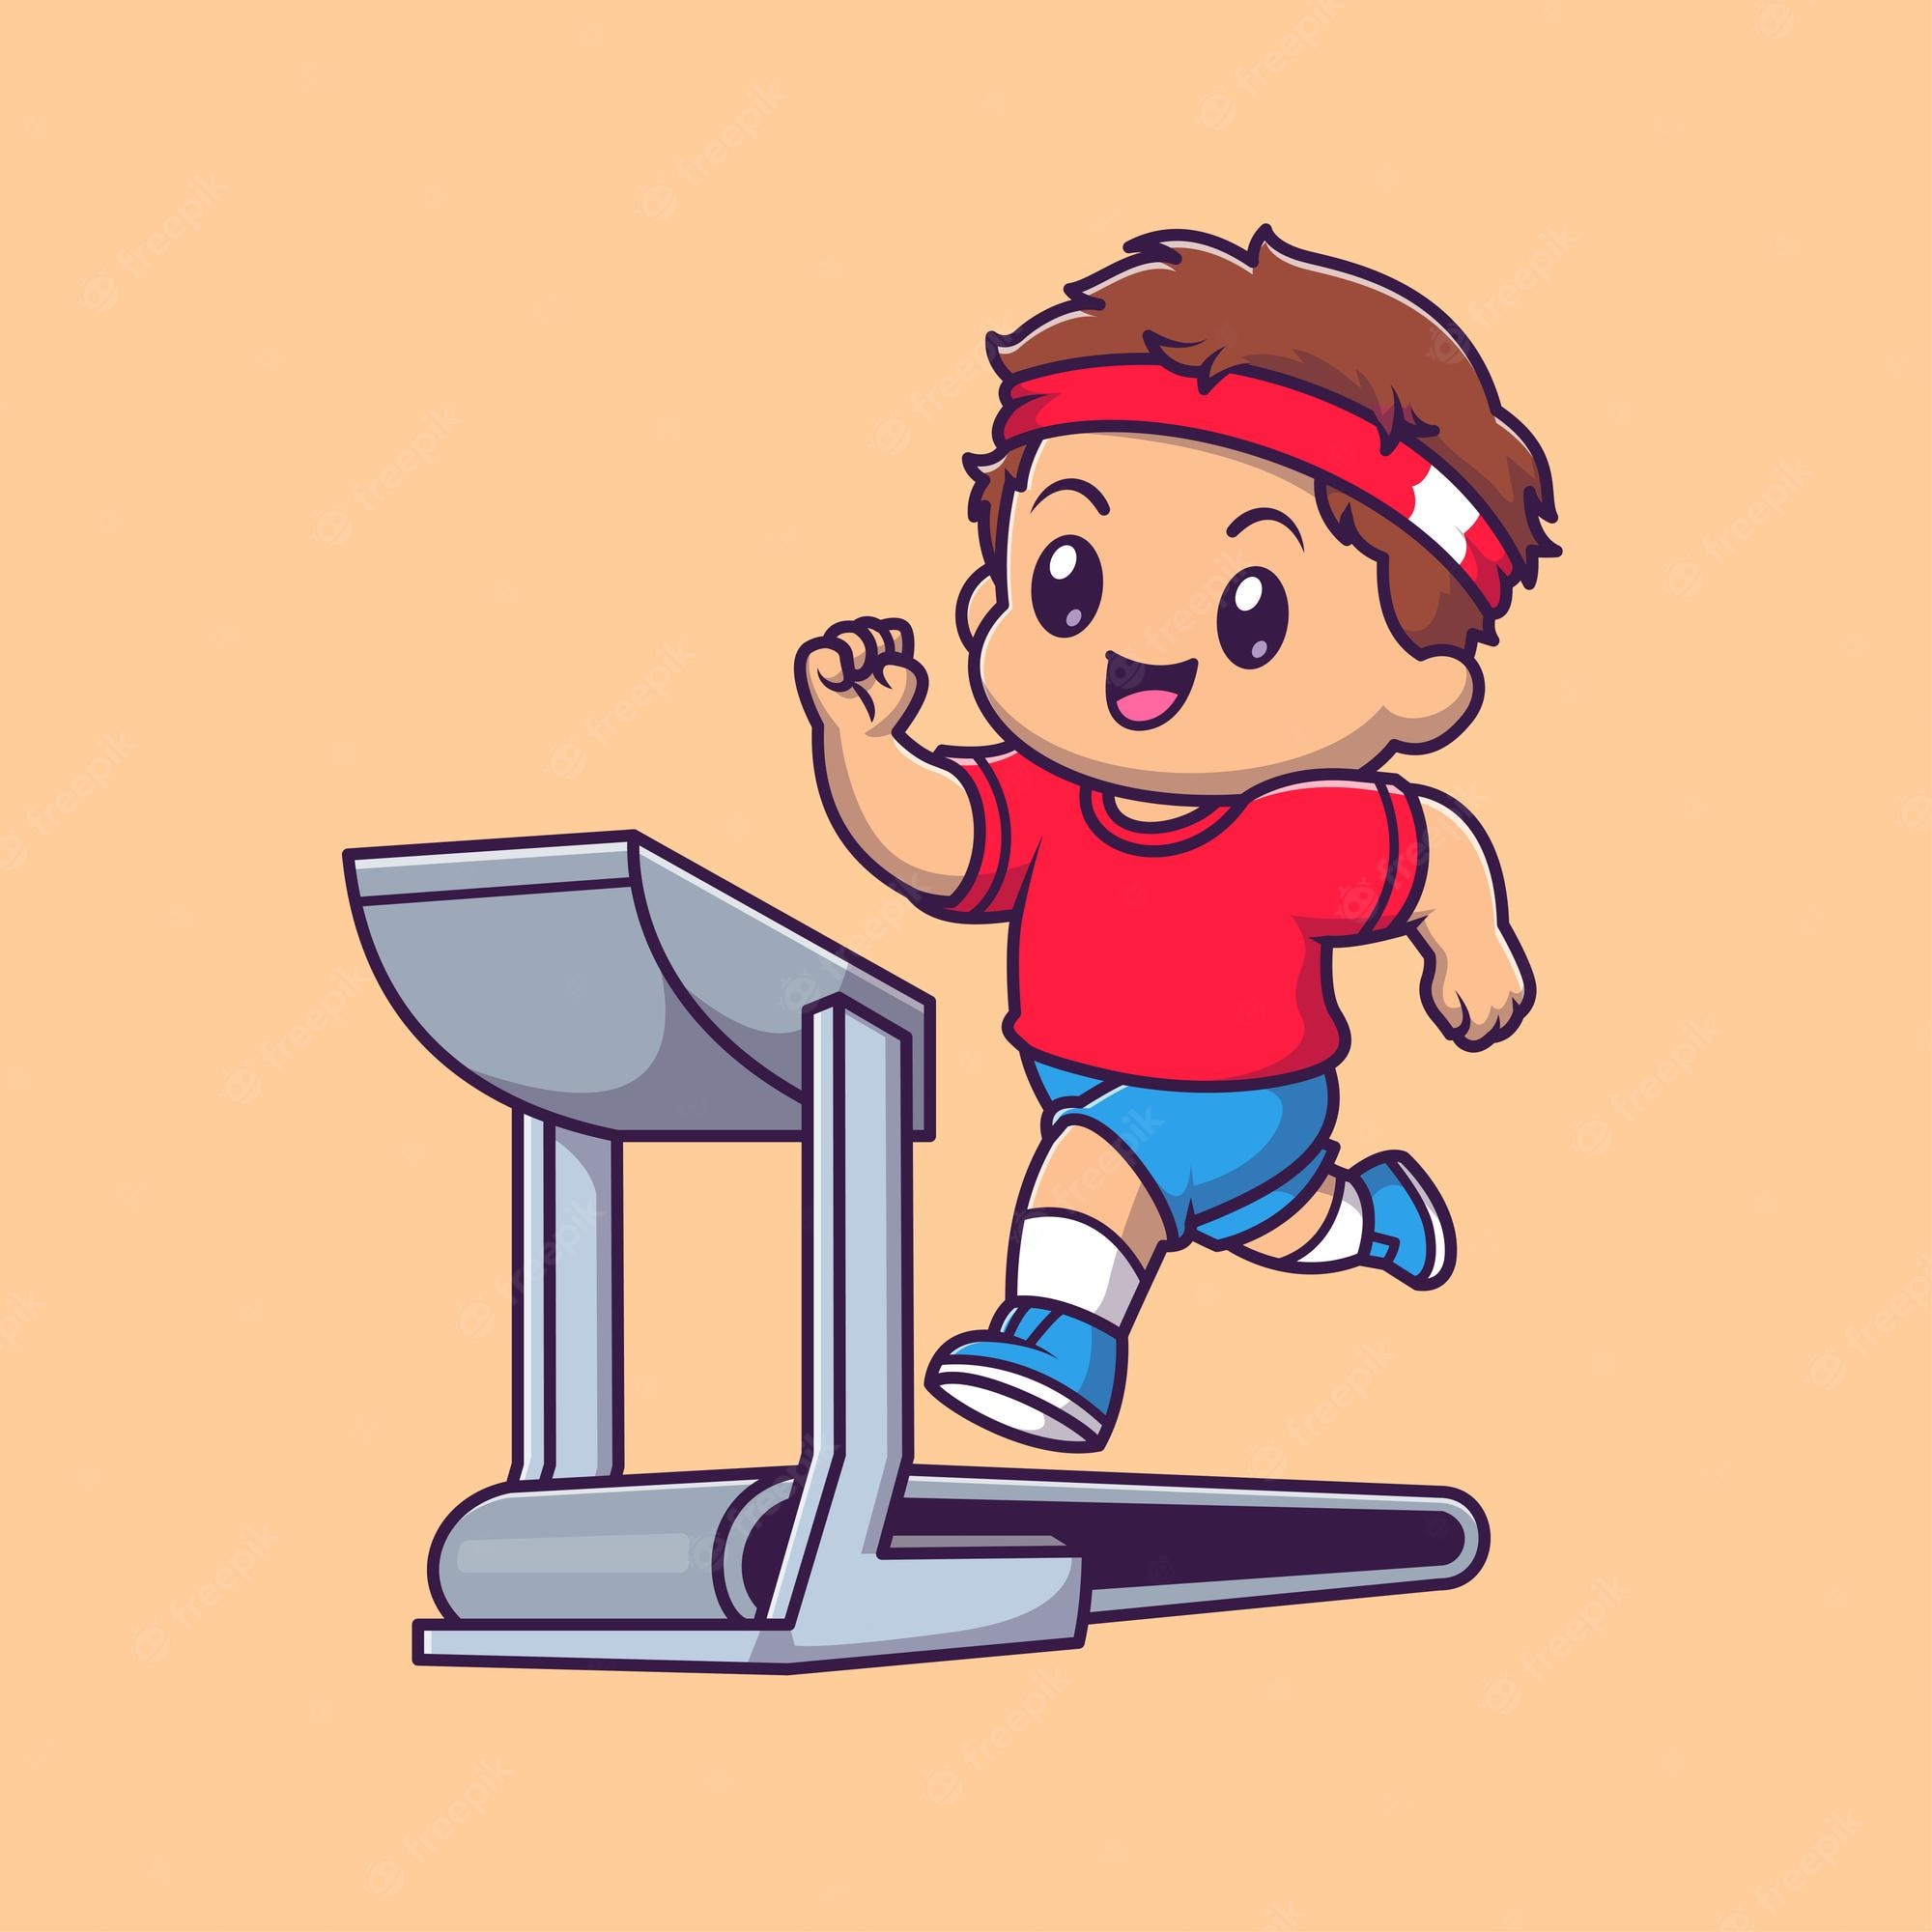 Treadmill exercise cartoon illustration vector free download